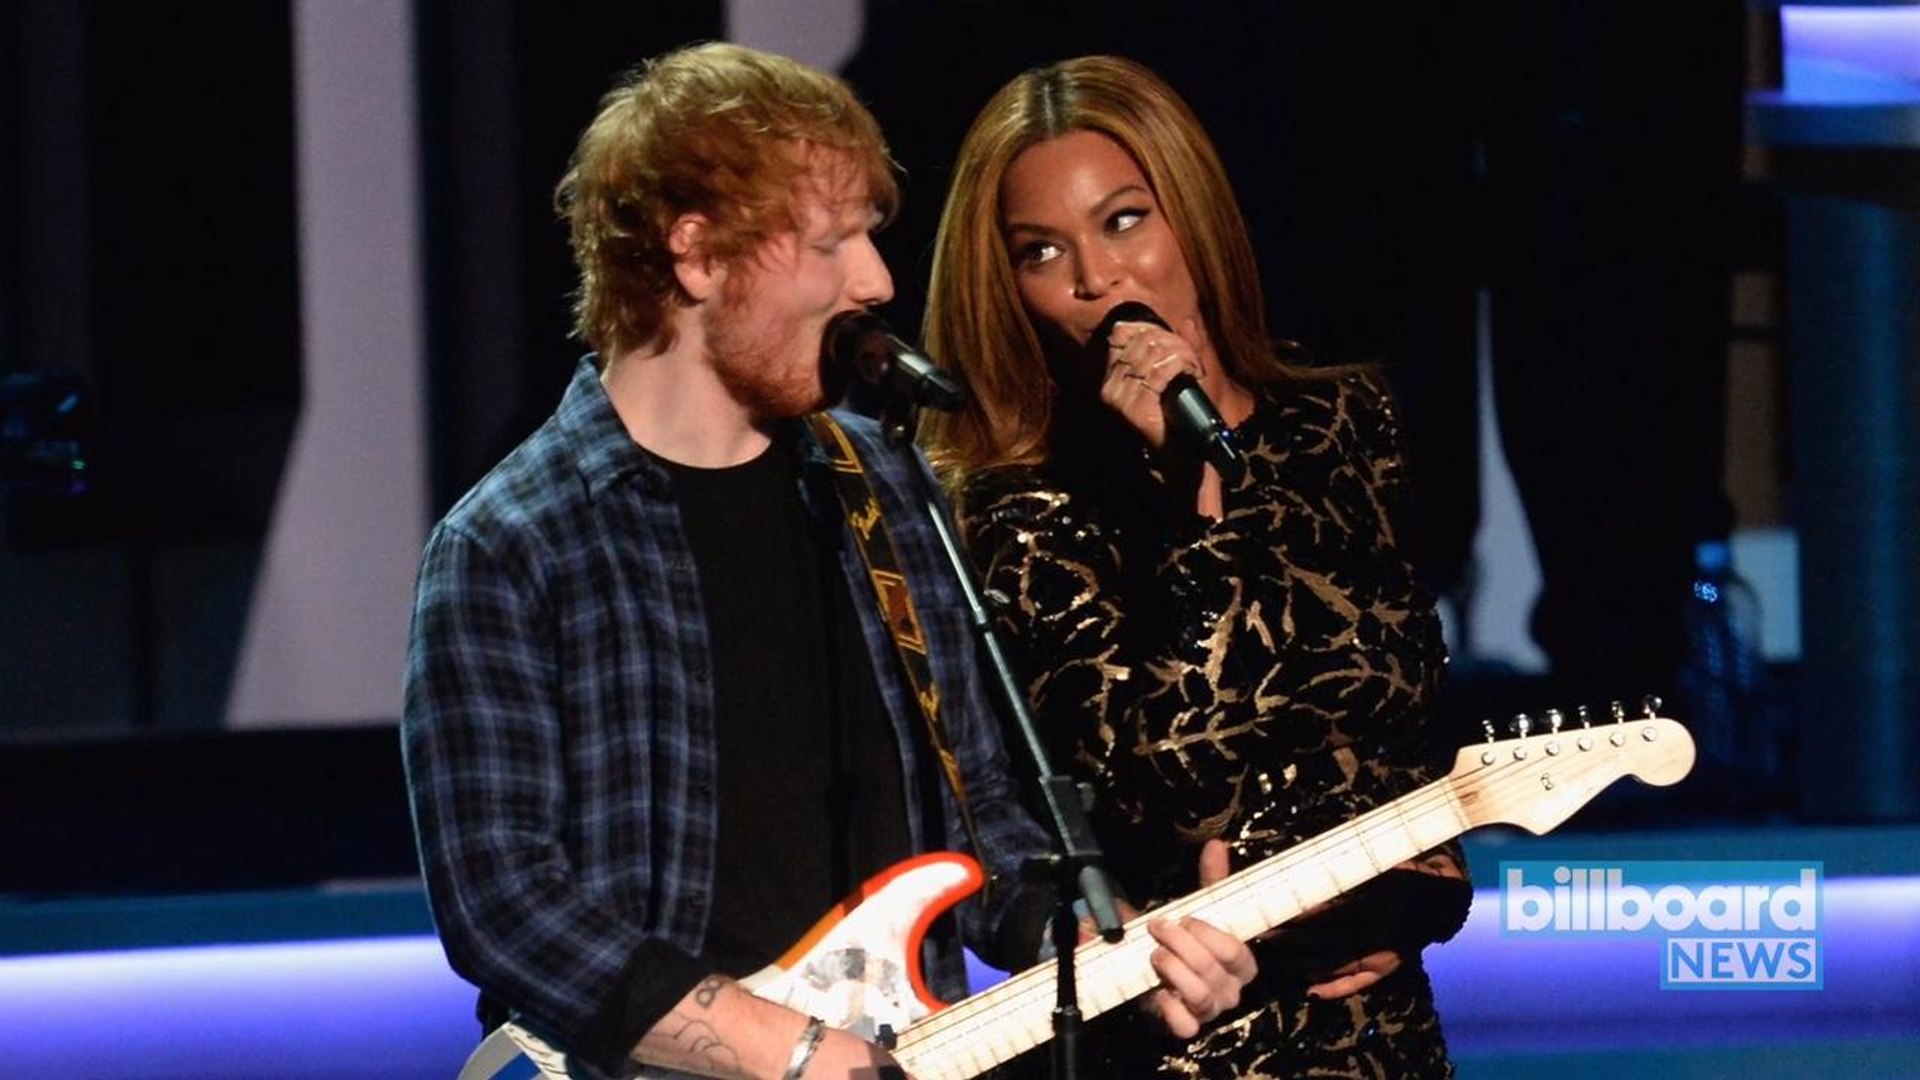 Ed Sheeran & Beyonce's 'Perfect' Tops Hot 100 for Third Week | Billboard News